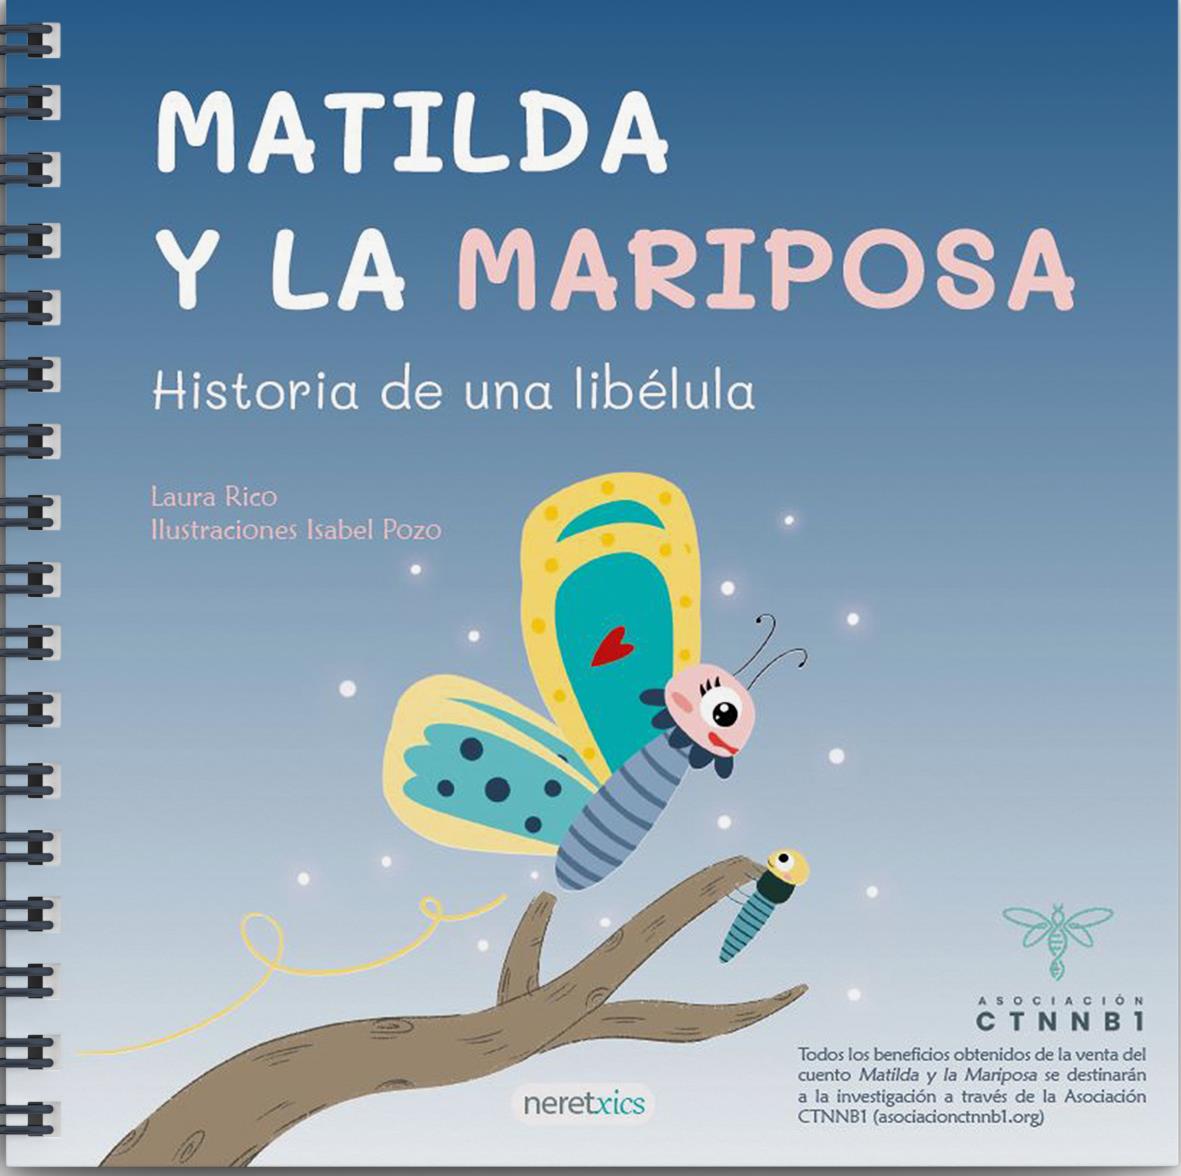 MATILDA Y LA MARIPOSA. HISTORIA DE UNA LIBÉLULA